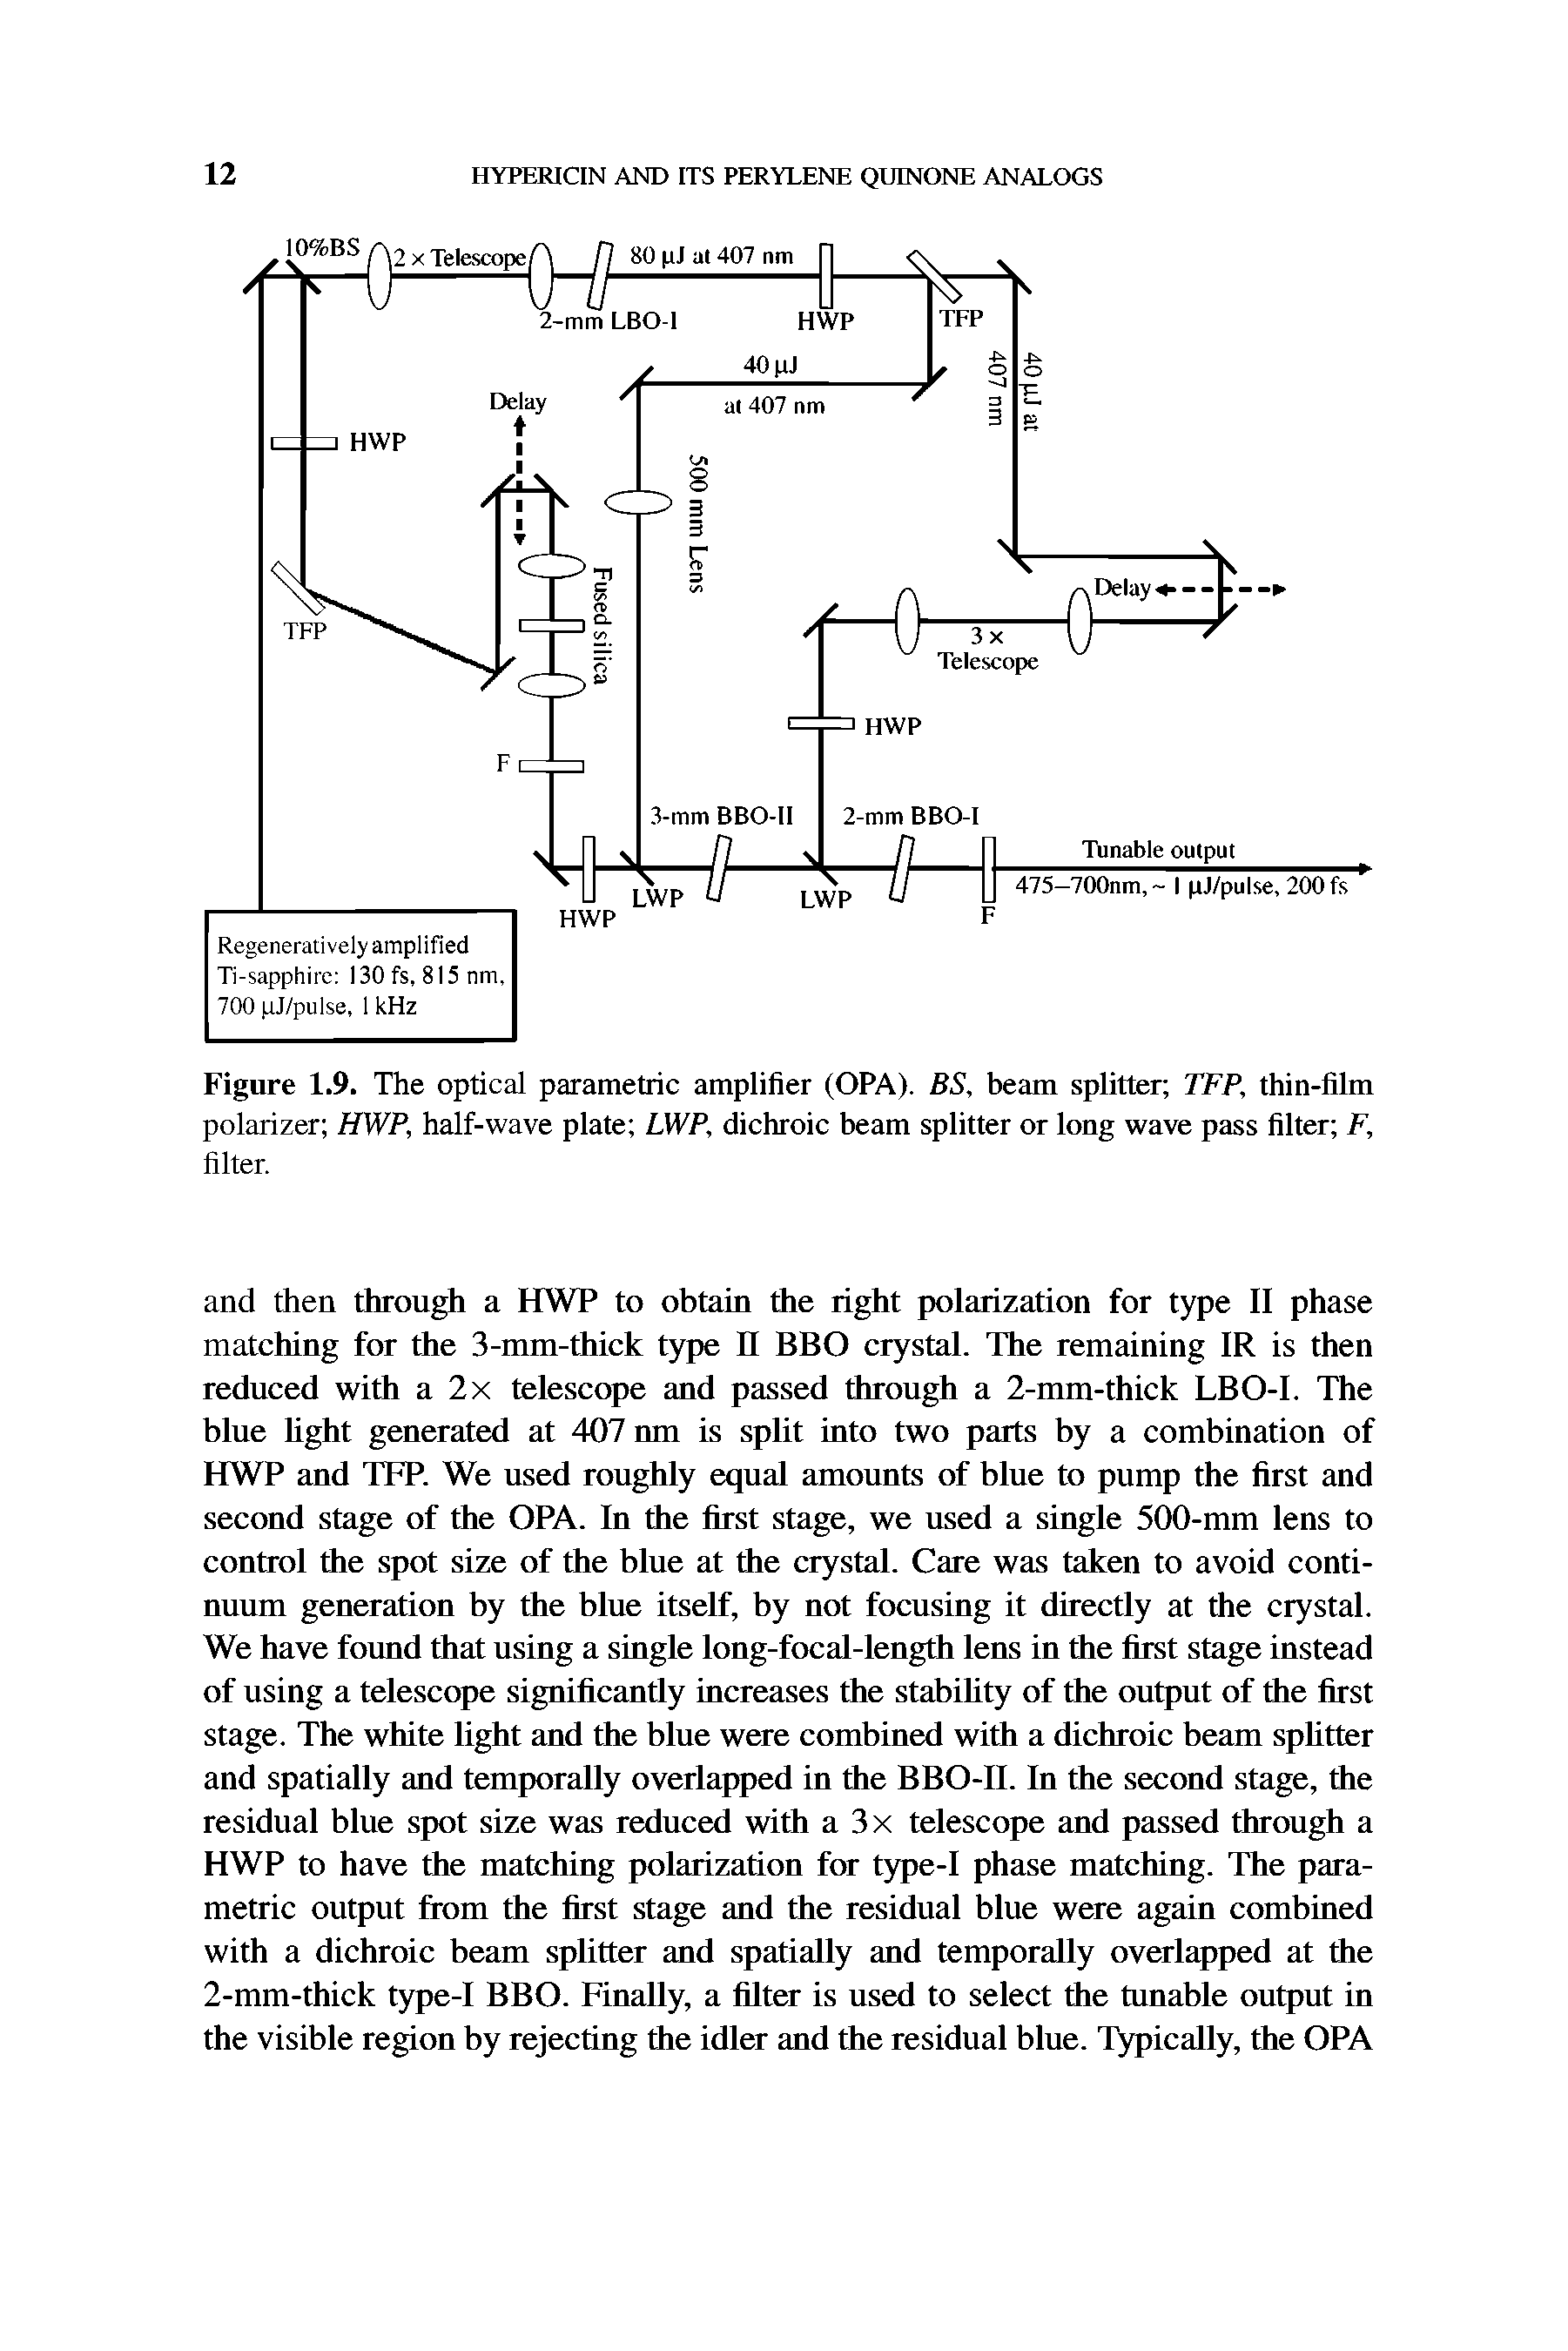 Figure 1.9. The optical parametric amplifier (OPA). BS, beam splitter TFP, thin-film polarizer HWP, half-wave plate IMP, dichroic beam splitter or long wave pass filter F,...